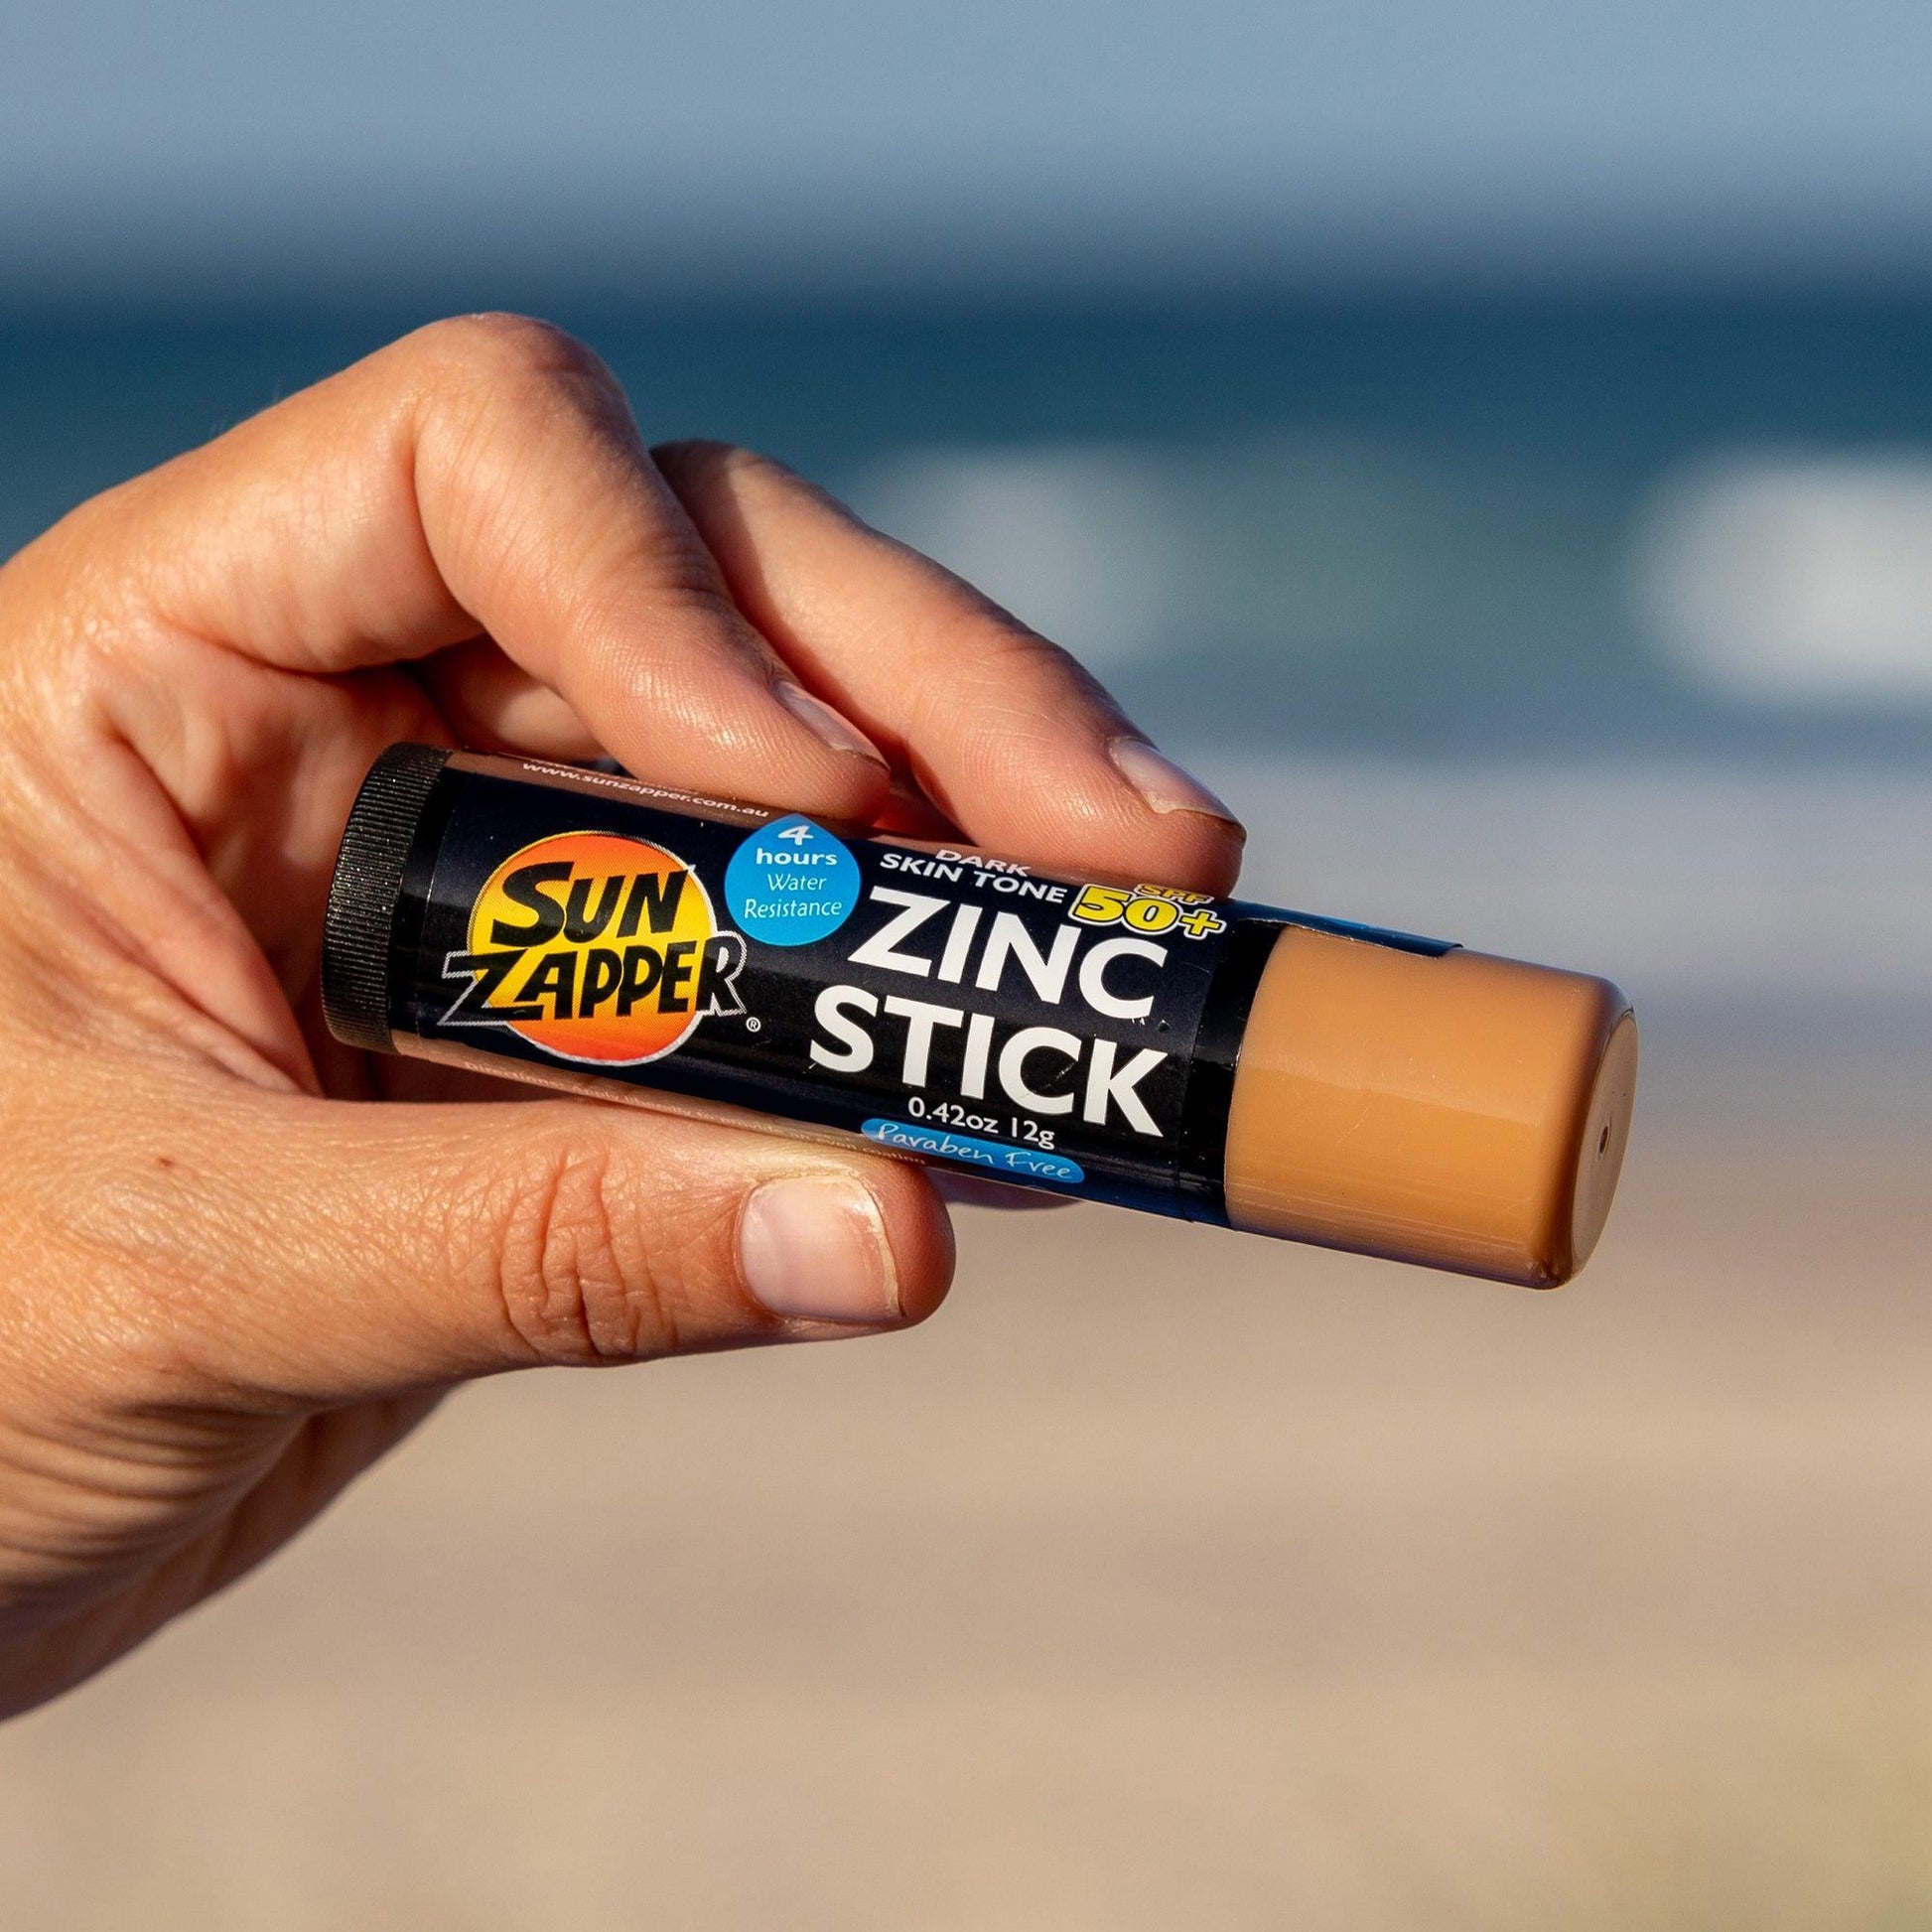 Sun Zapper Dark Skin Tone Zinc Stick SPF 50+ Zinc Sunscreen Stick - Sun Zapper UK